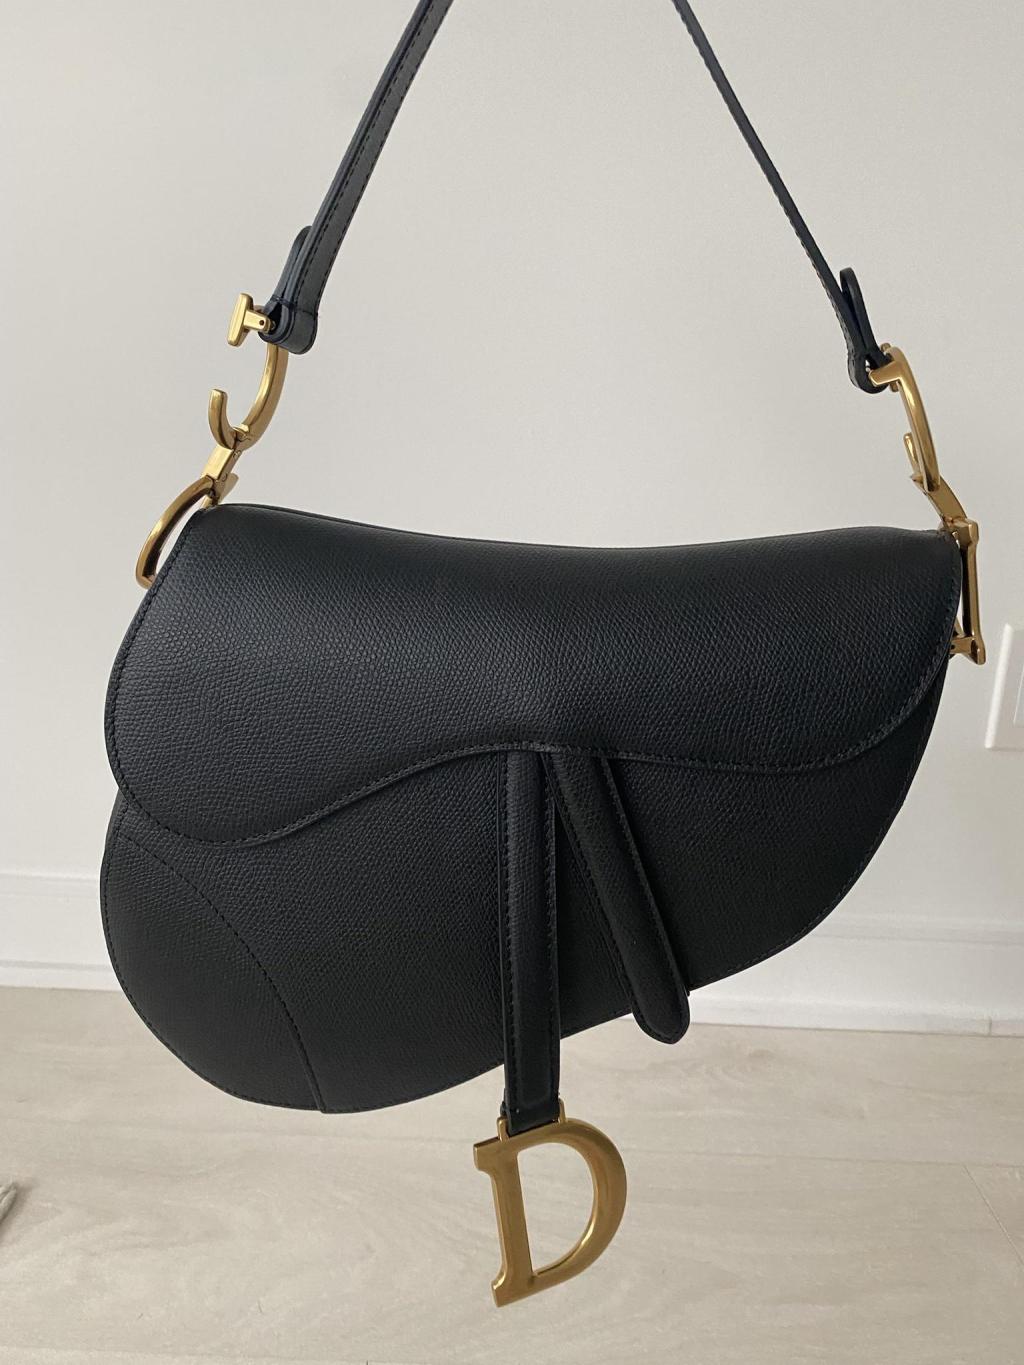 [Review]  Christian Dior Saddle Bag from DMZ Factory